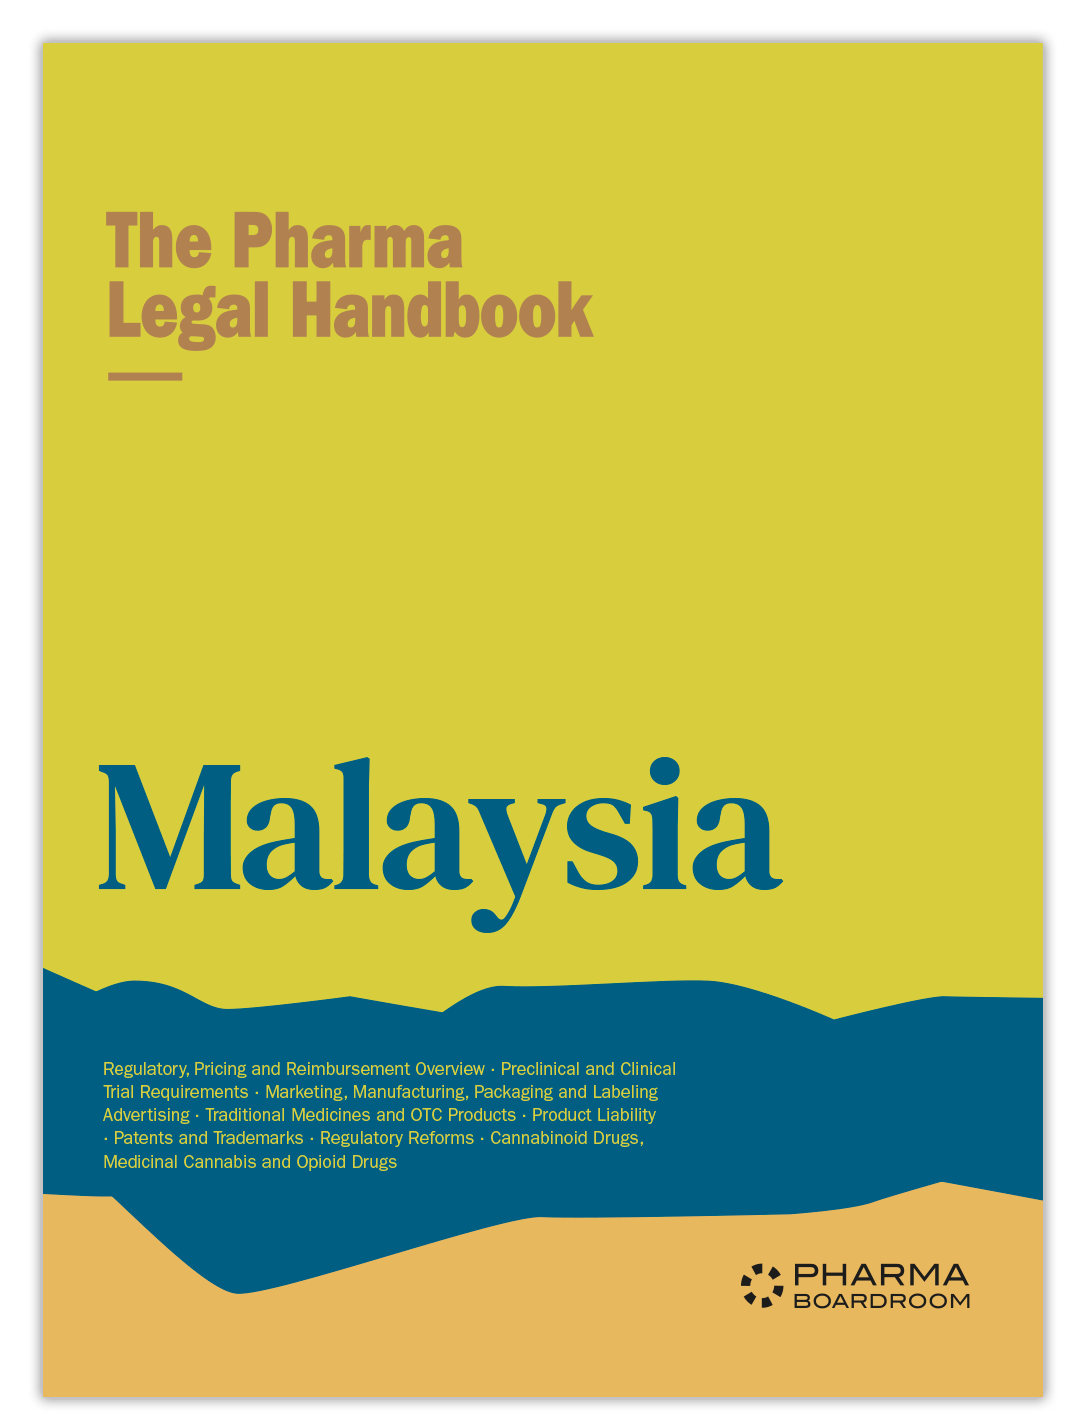 The Pharma Legal Handbook: Malaysia